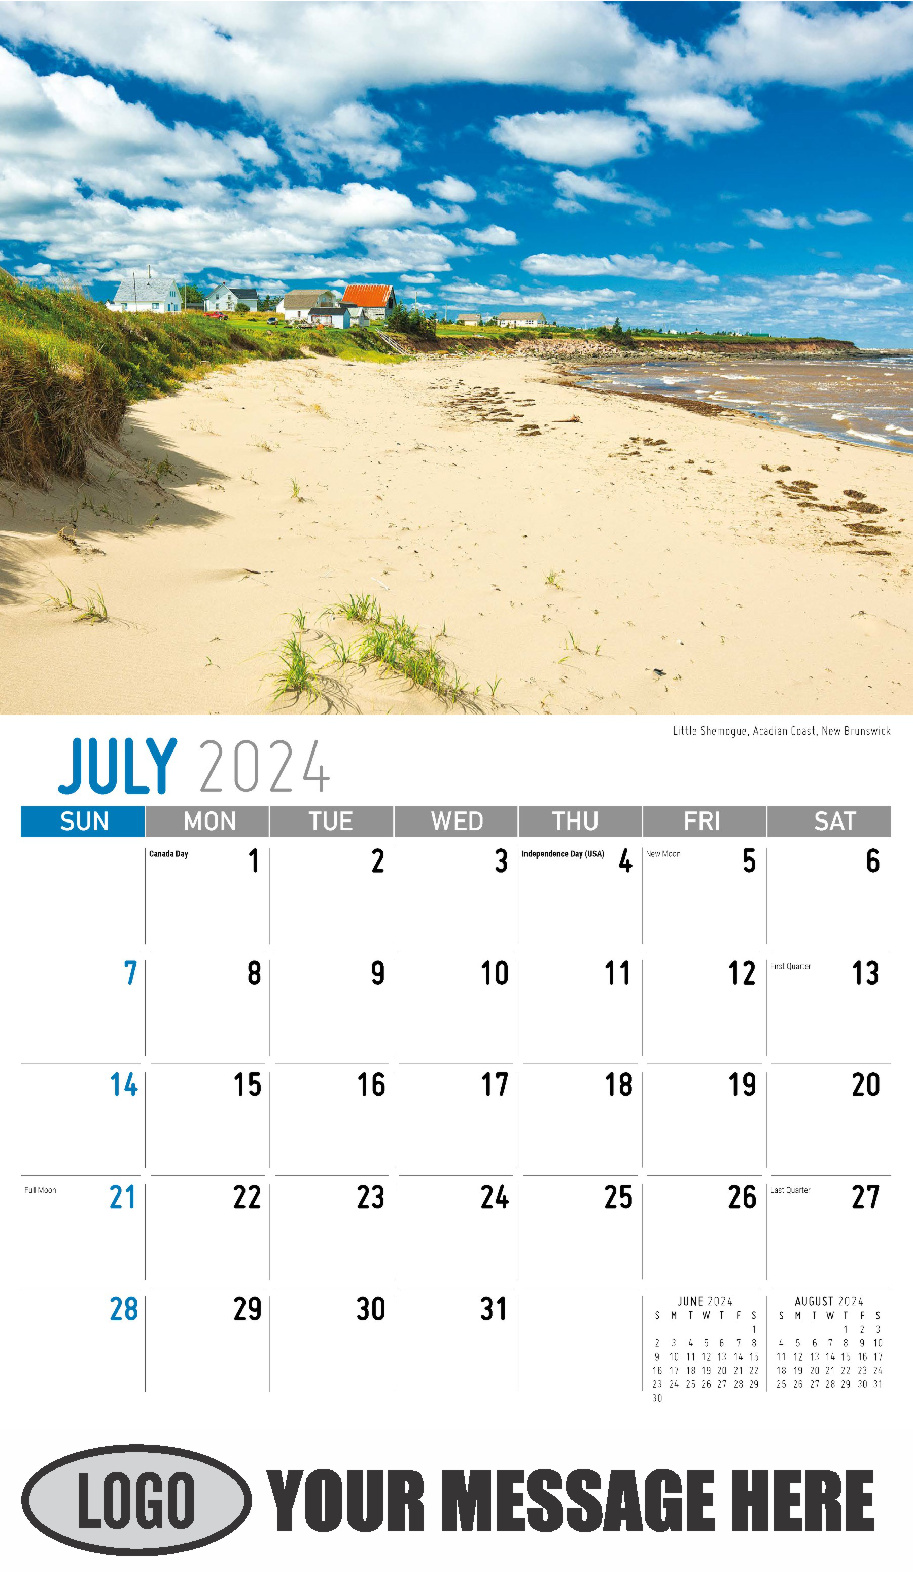 Atlantic Canada Scenic 2024 Business Promotion Calendar - July